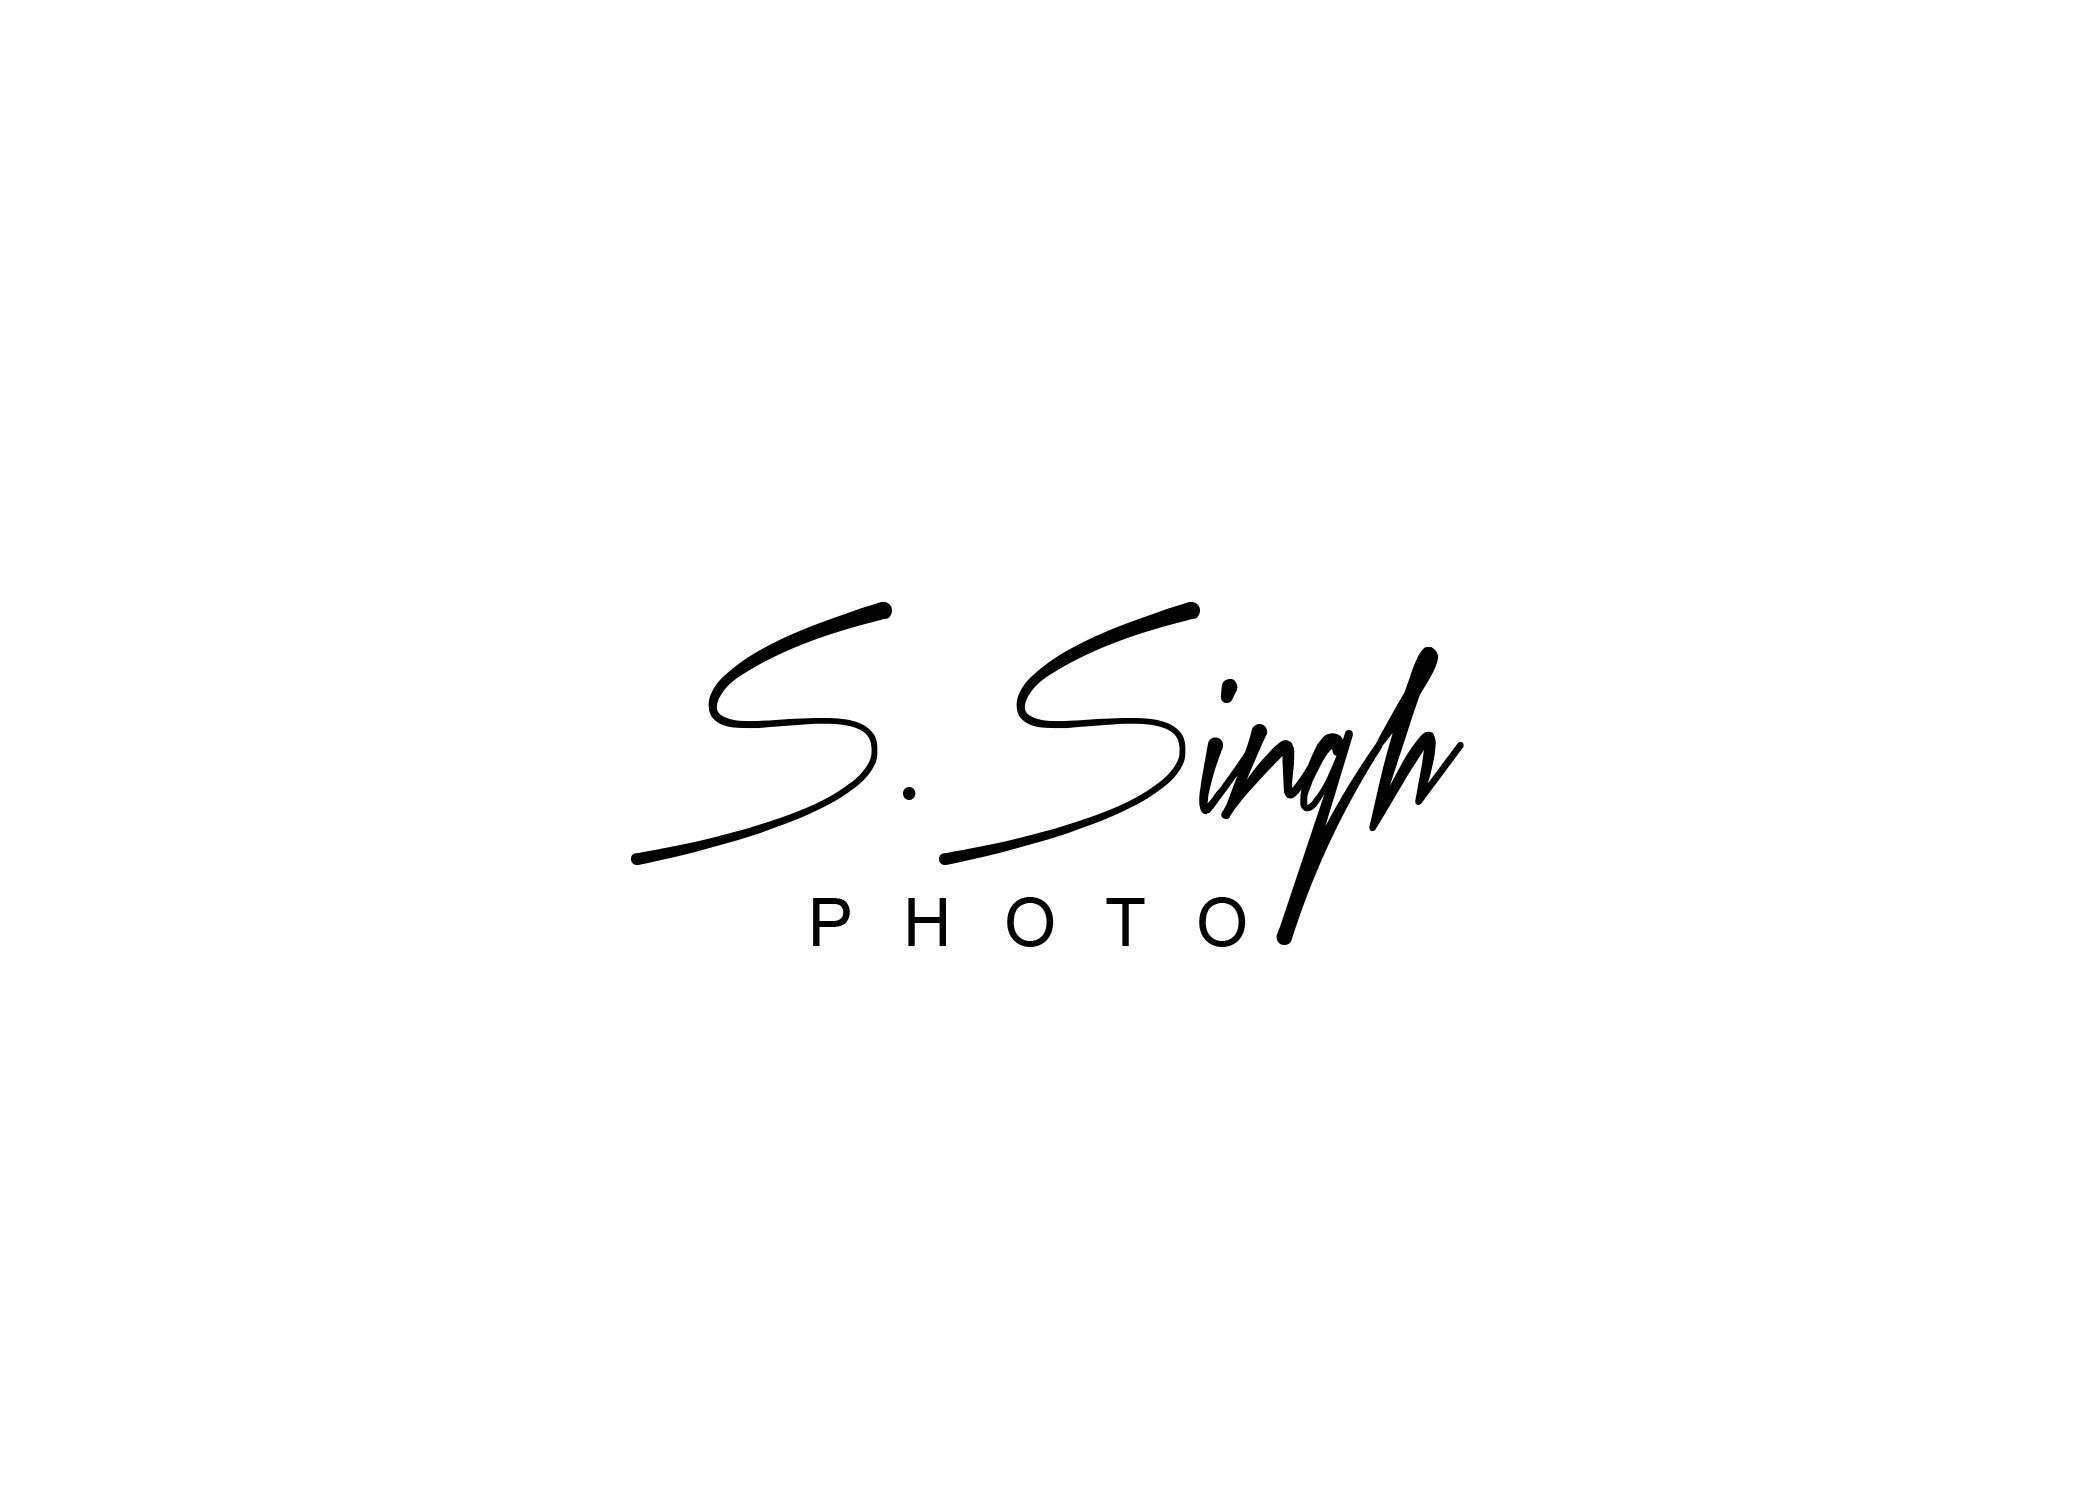 Sunny Singh Photography, LLC.